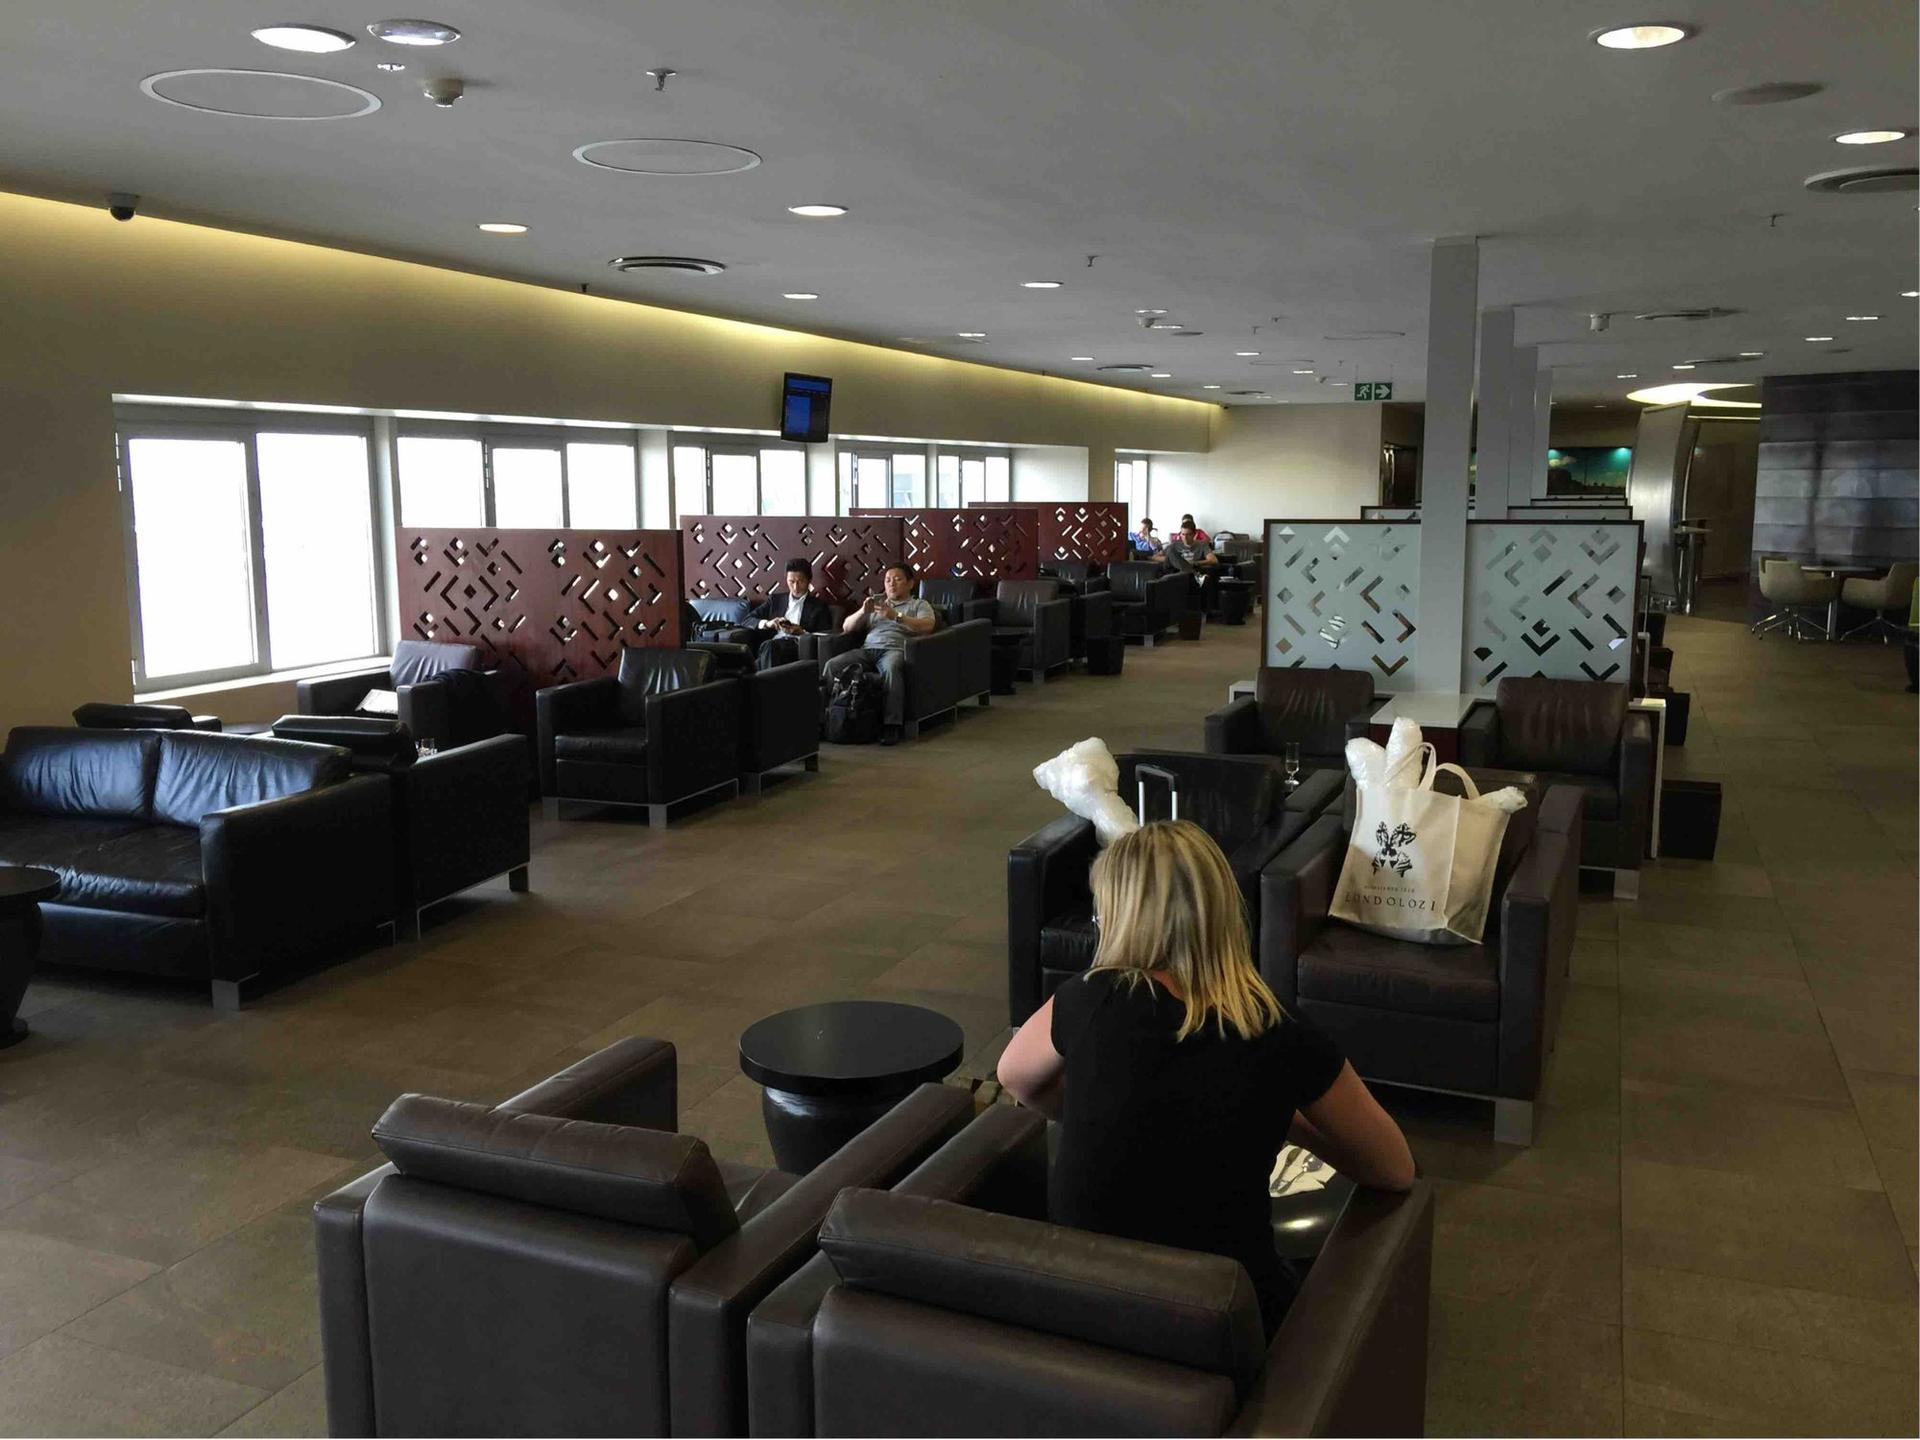 SAA South African Airways International Premium Lounge image 10 of 31